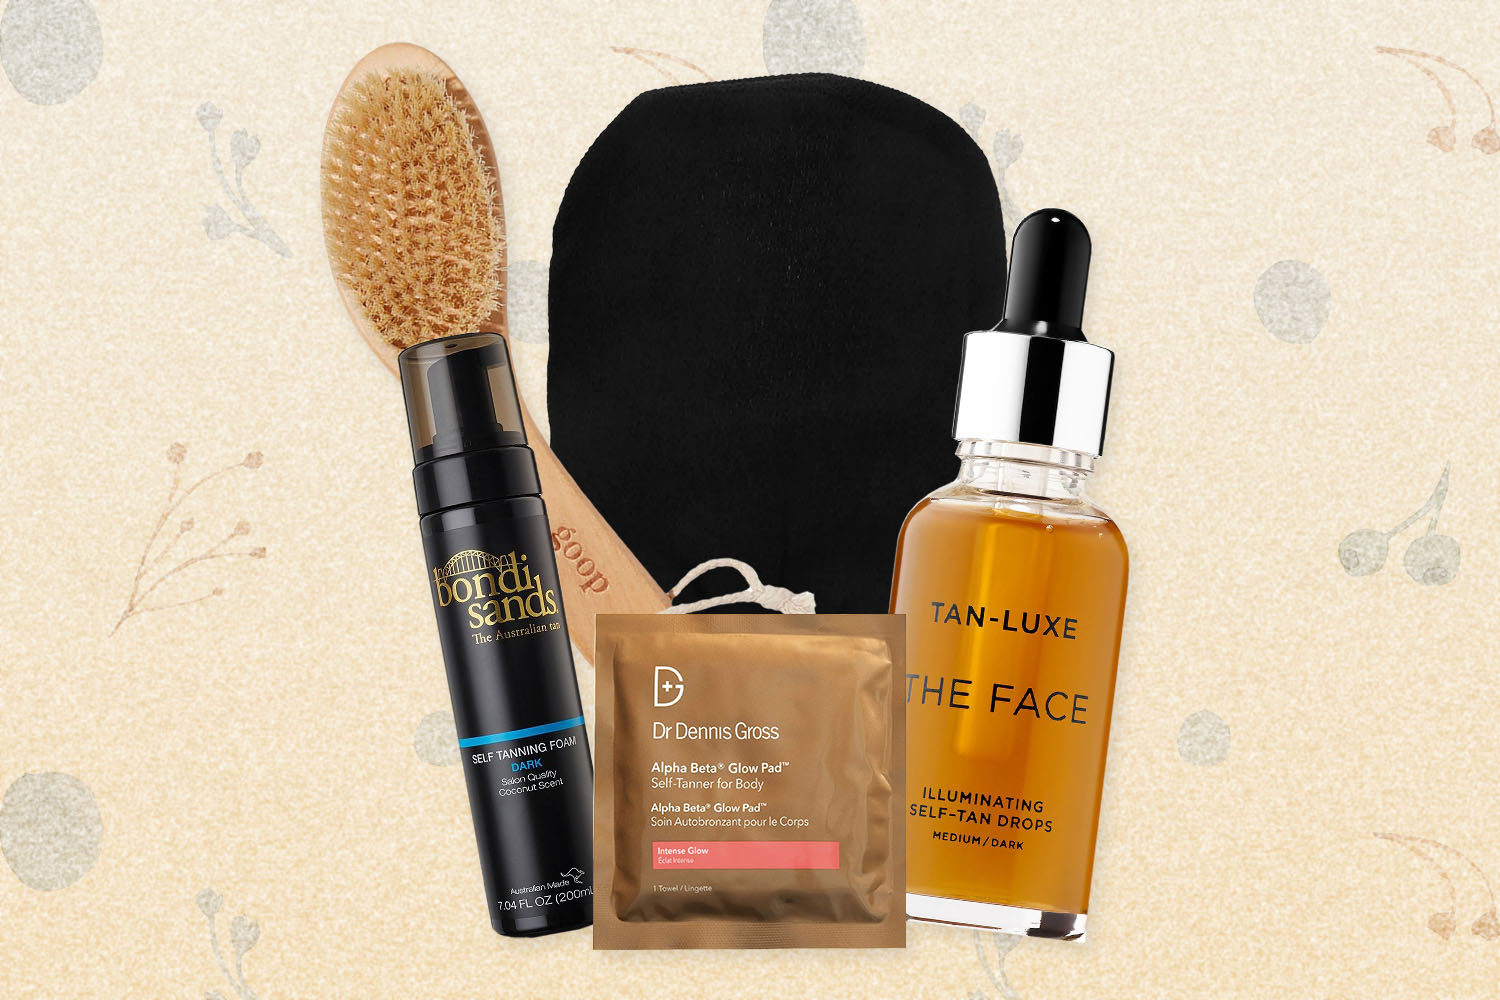 Skin care items: dry brush, self-tanning foam and drops, exfoliator glove